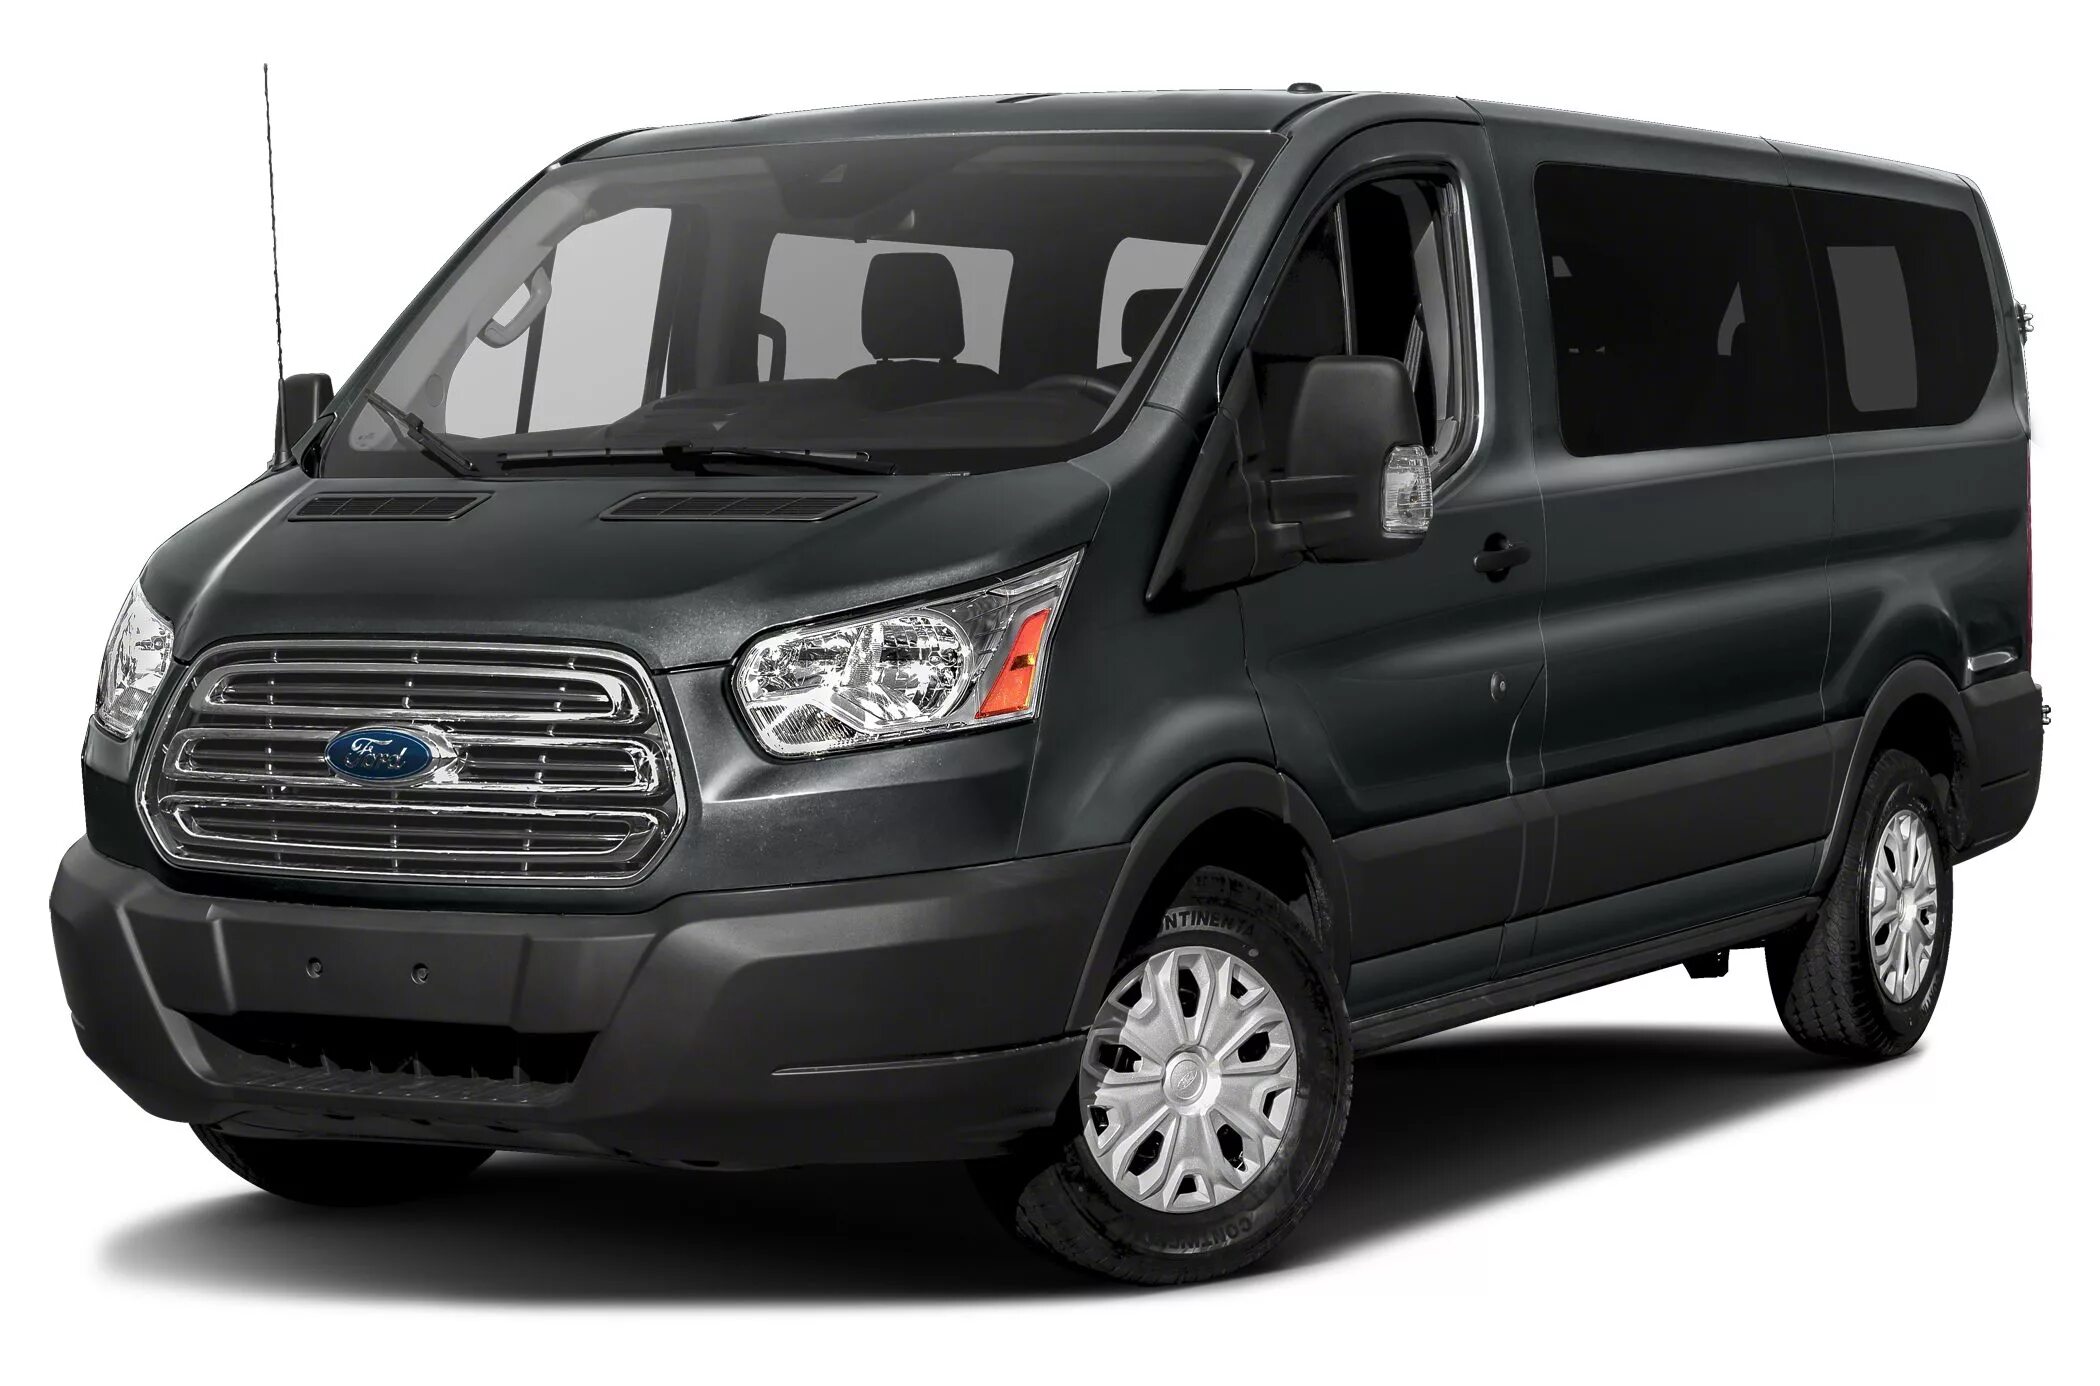 Китайский транзит. Ford Transit Passenger van. 2016 Ford Transit 150. Ford Transit 150 van 2017. 2015 Ford Transit 350 Cargo van.